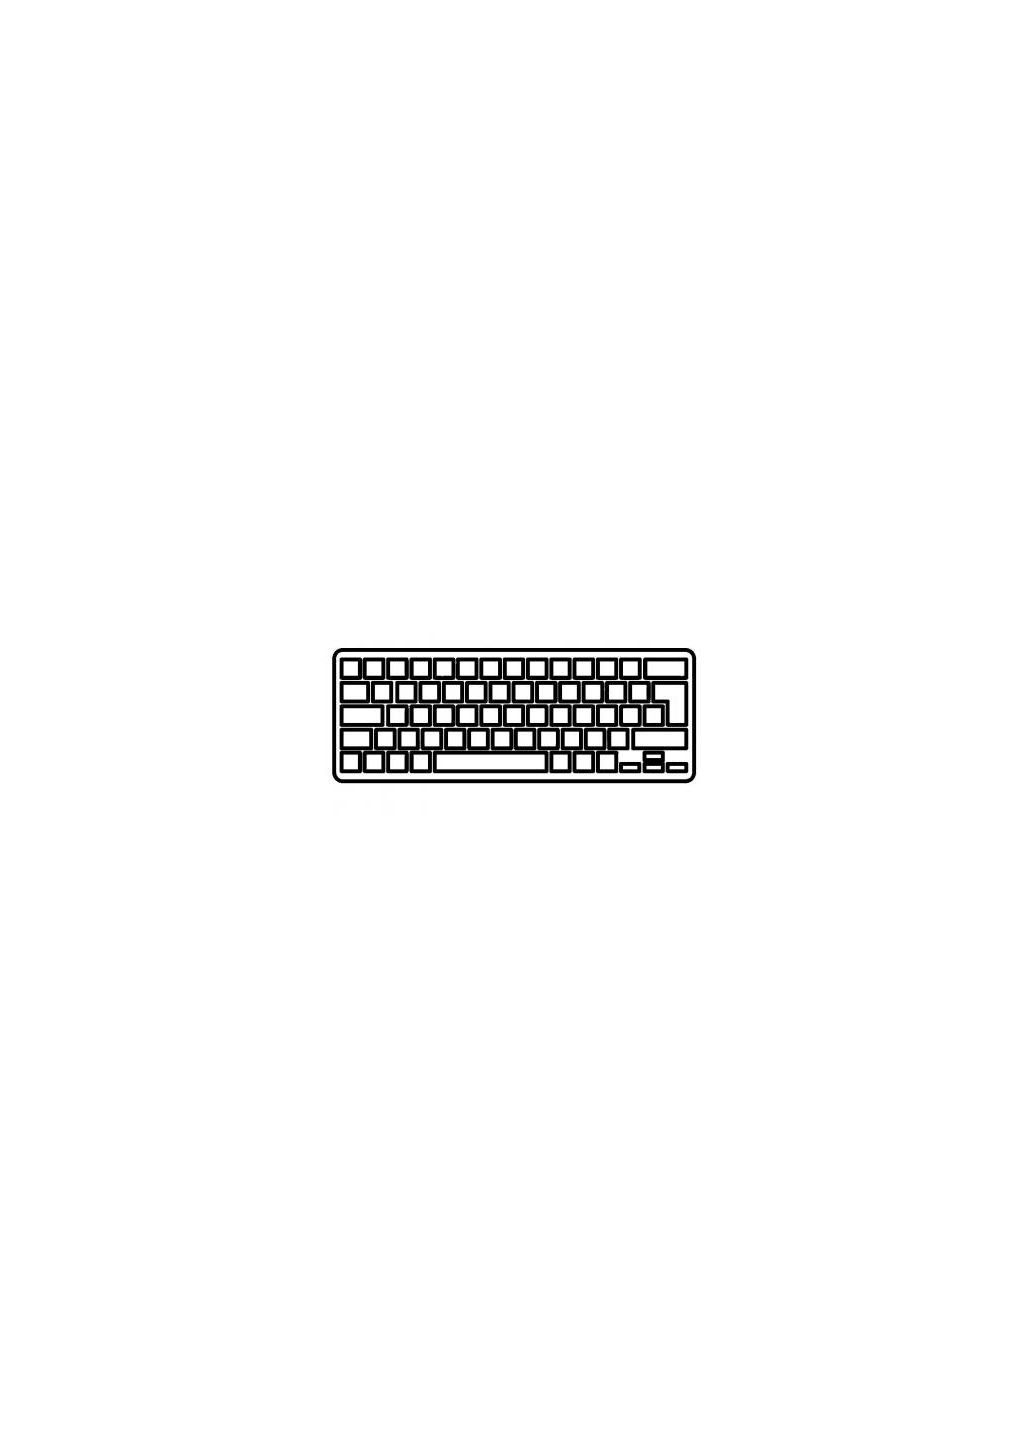 Клавиатура ноутбука (A43195) Acer aspire 5236/5242/5536g series черная матовая ru (276706609)